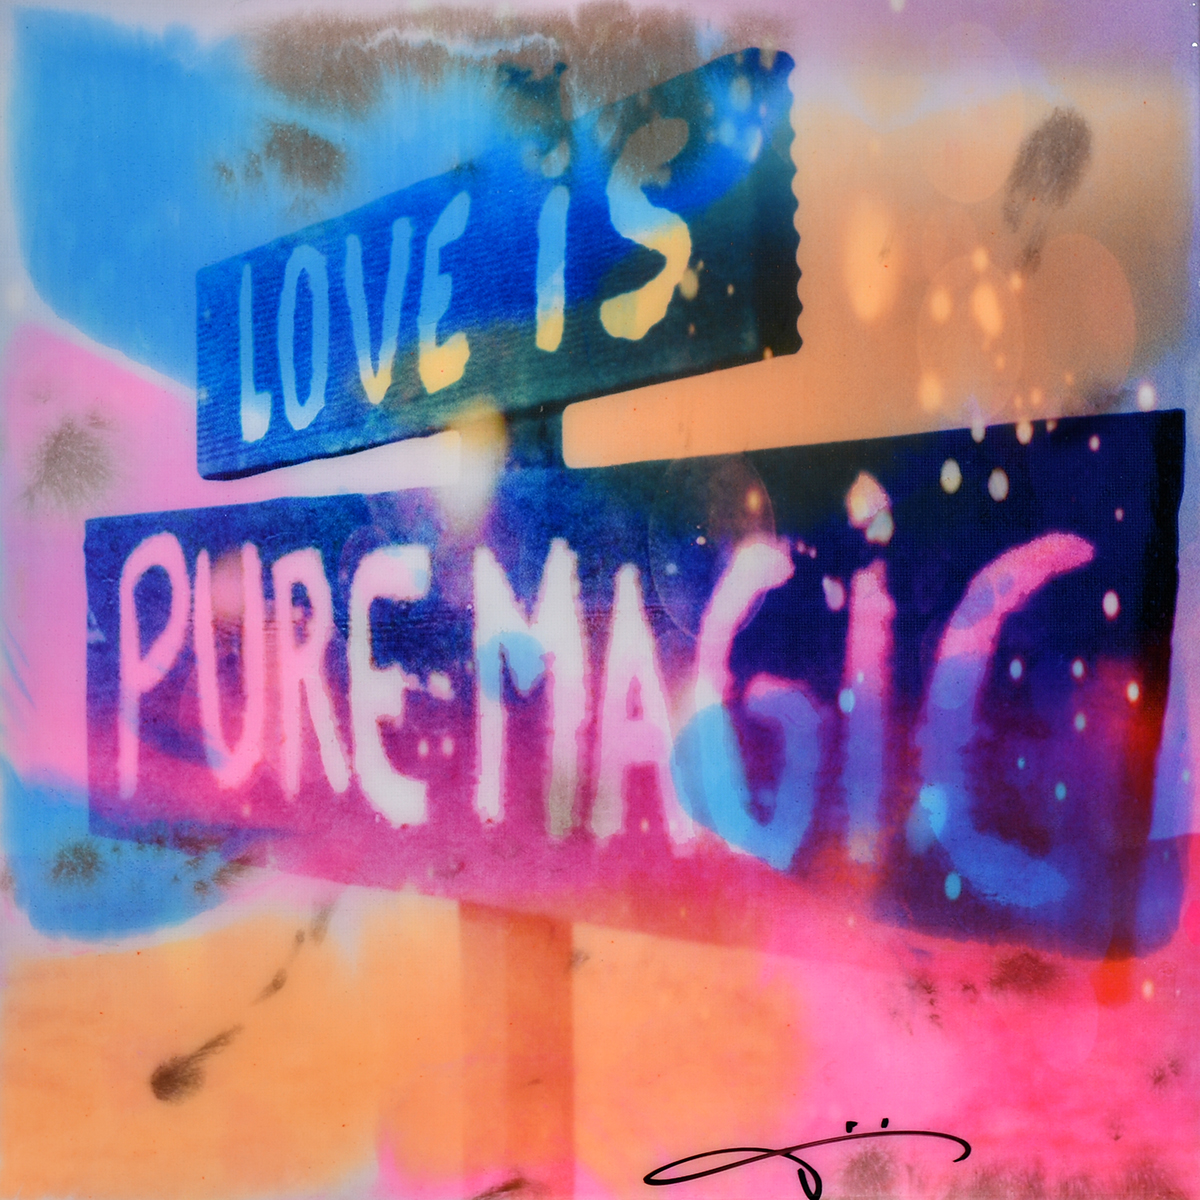 Pure Magic - Epoxy - 2019